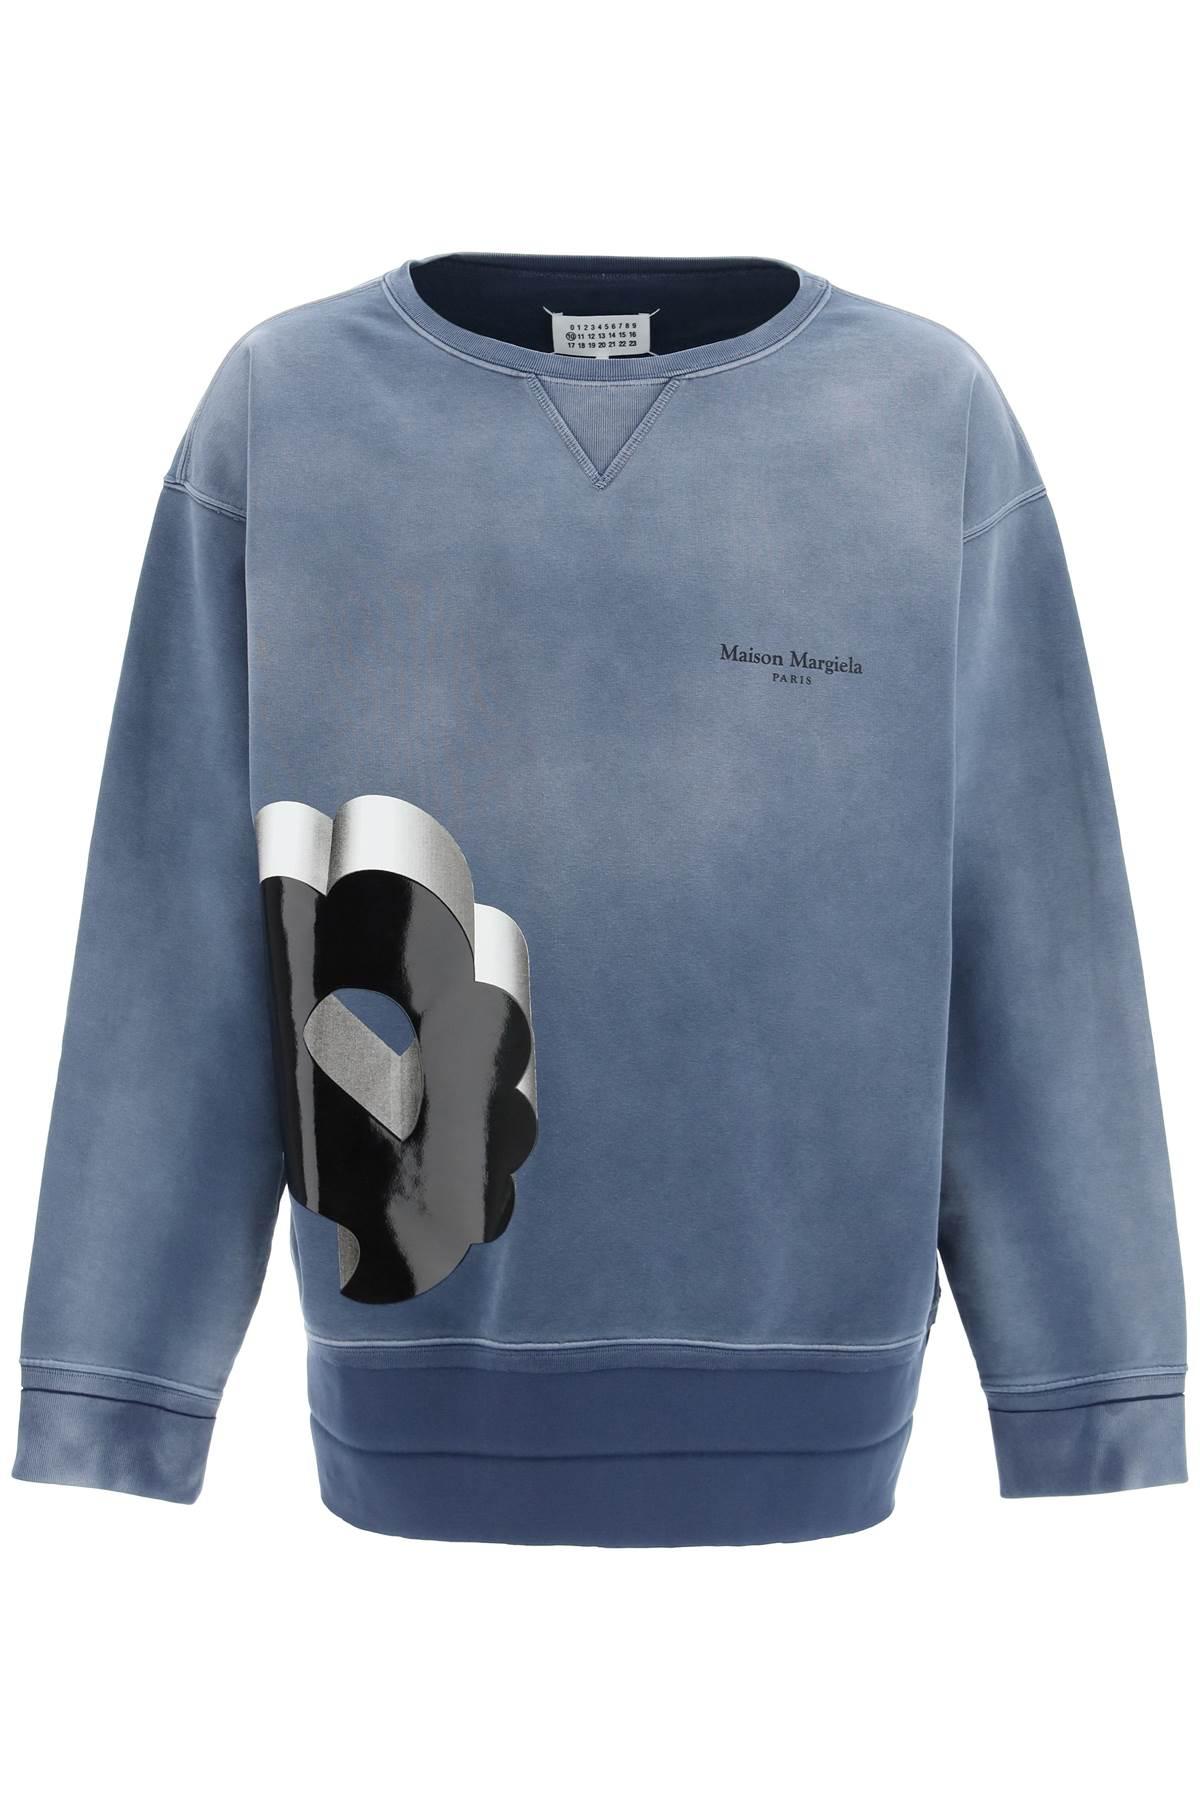 Maison Margiela Sweatshirt With Logo Graphic in Blue for Men | Lyst